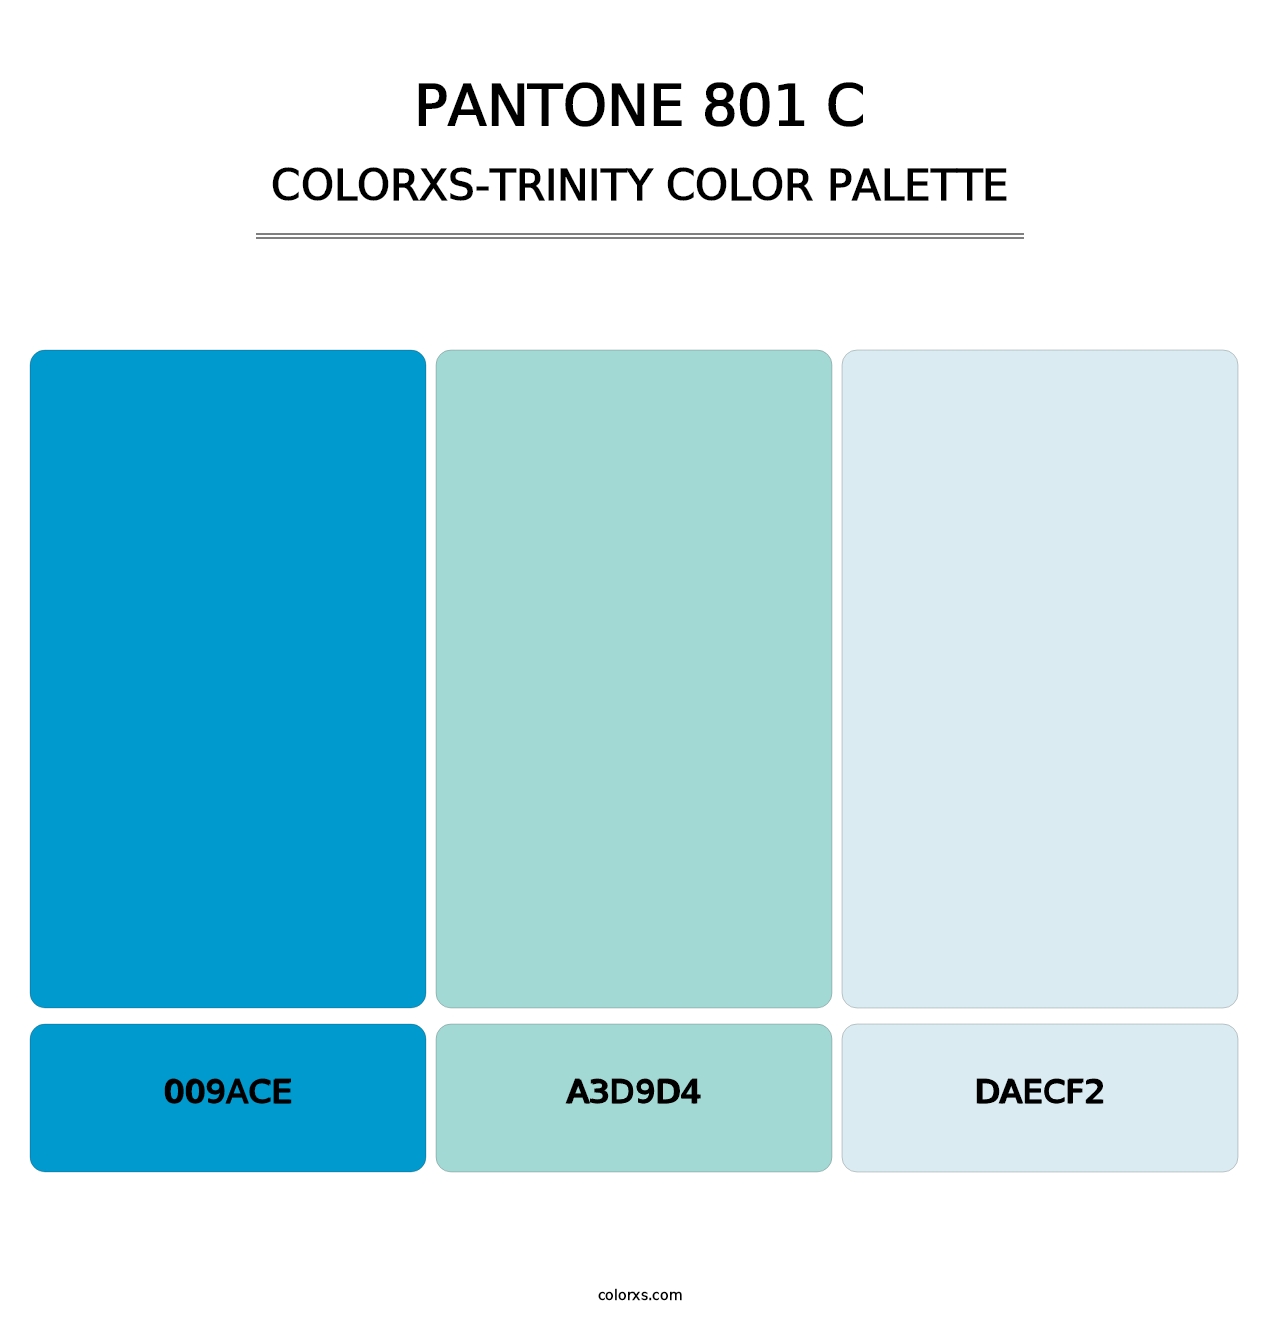 PANTONE 801 C - Colorxs Trinity Palette